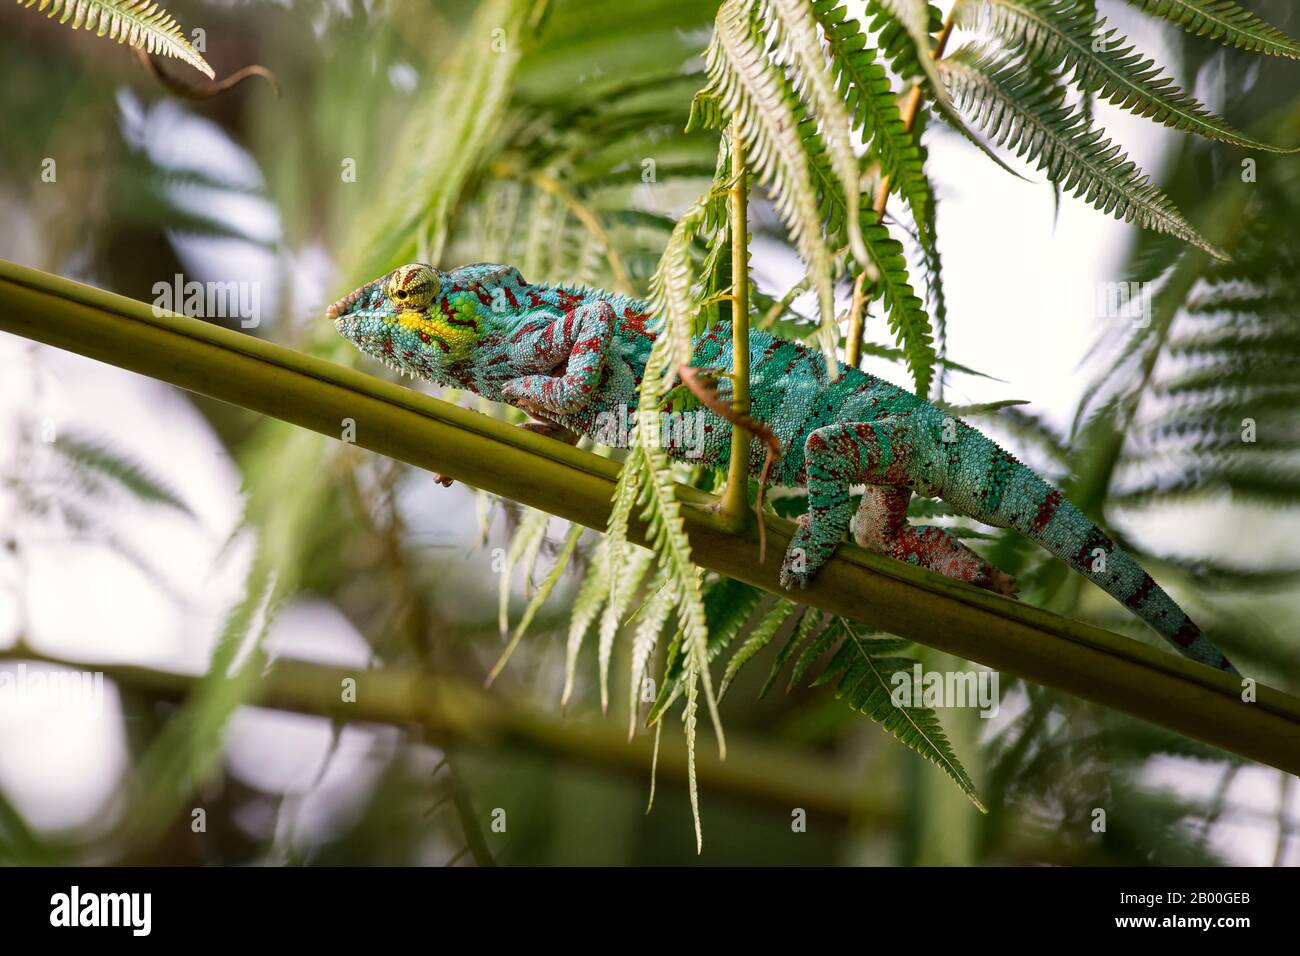 Panther Chameleon - Furcifer Pardalis, Madagascar. Bella lucertola dalla foresta pluviale del Madagascar, Endemica colorata. Foto Stock